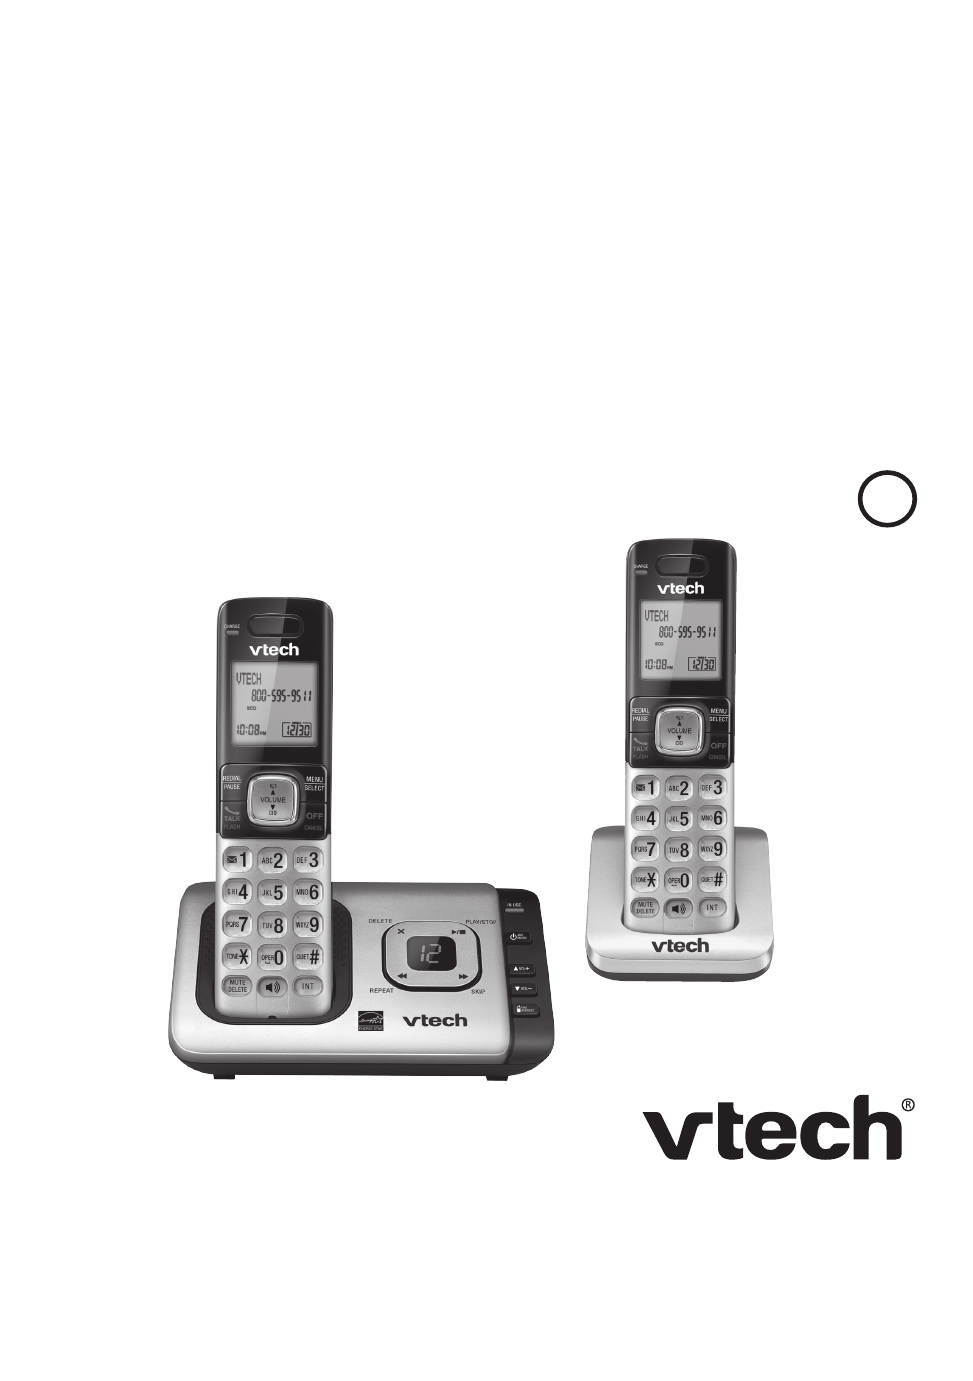 Vtech Dect 6.0 Cordless Phone User Manual